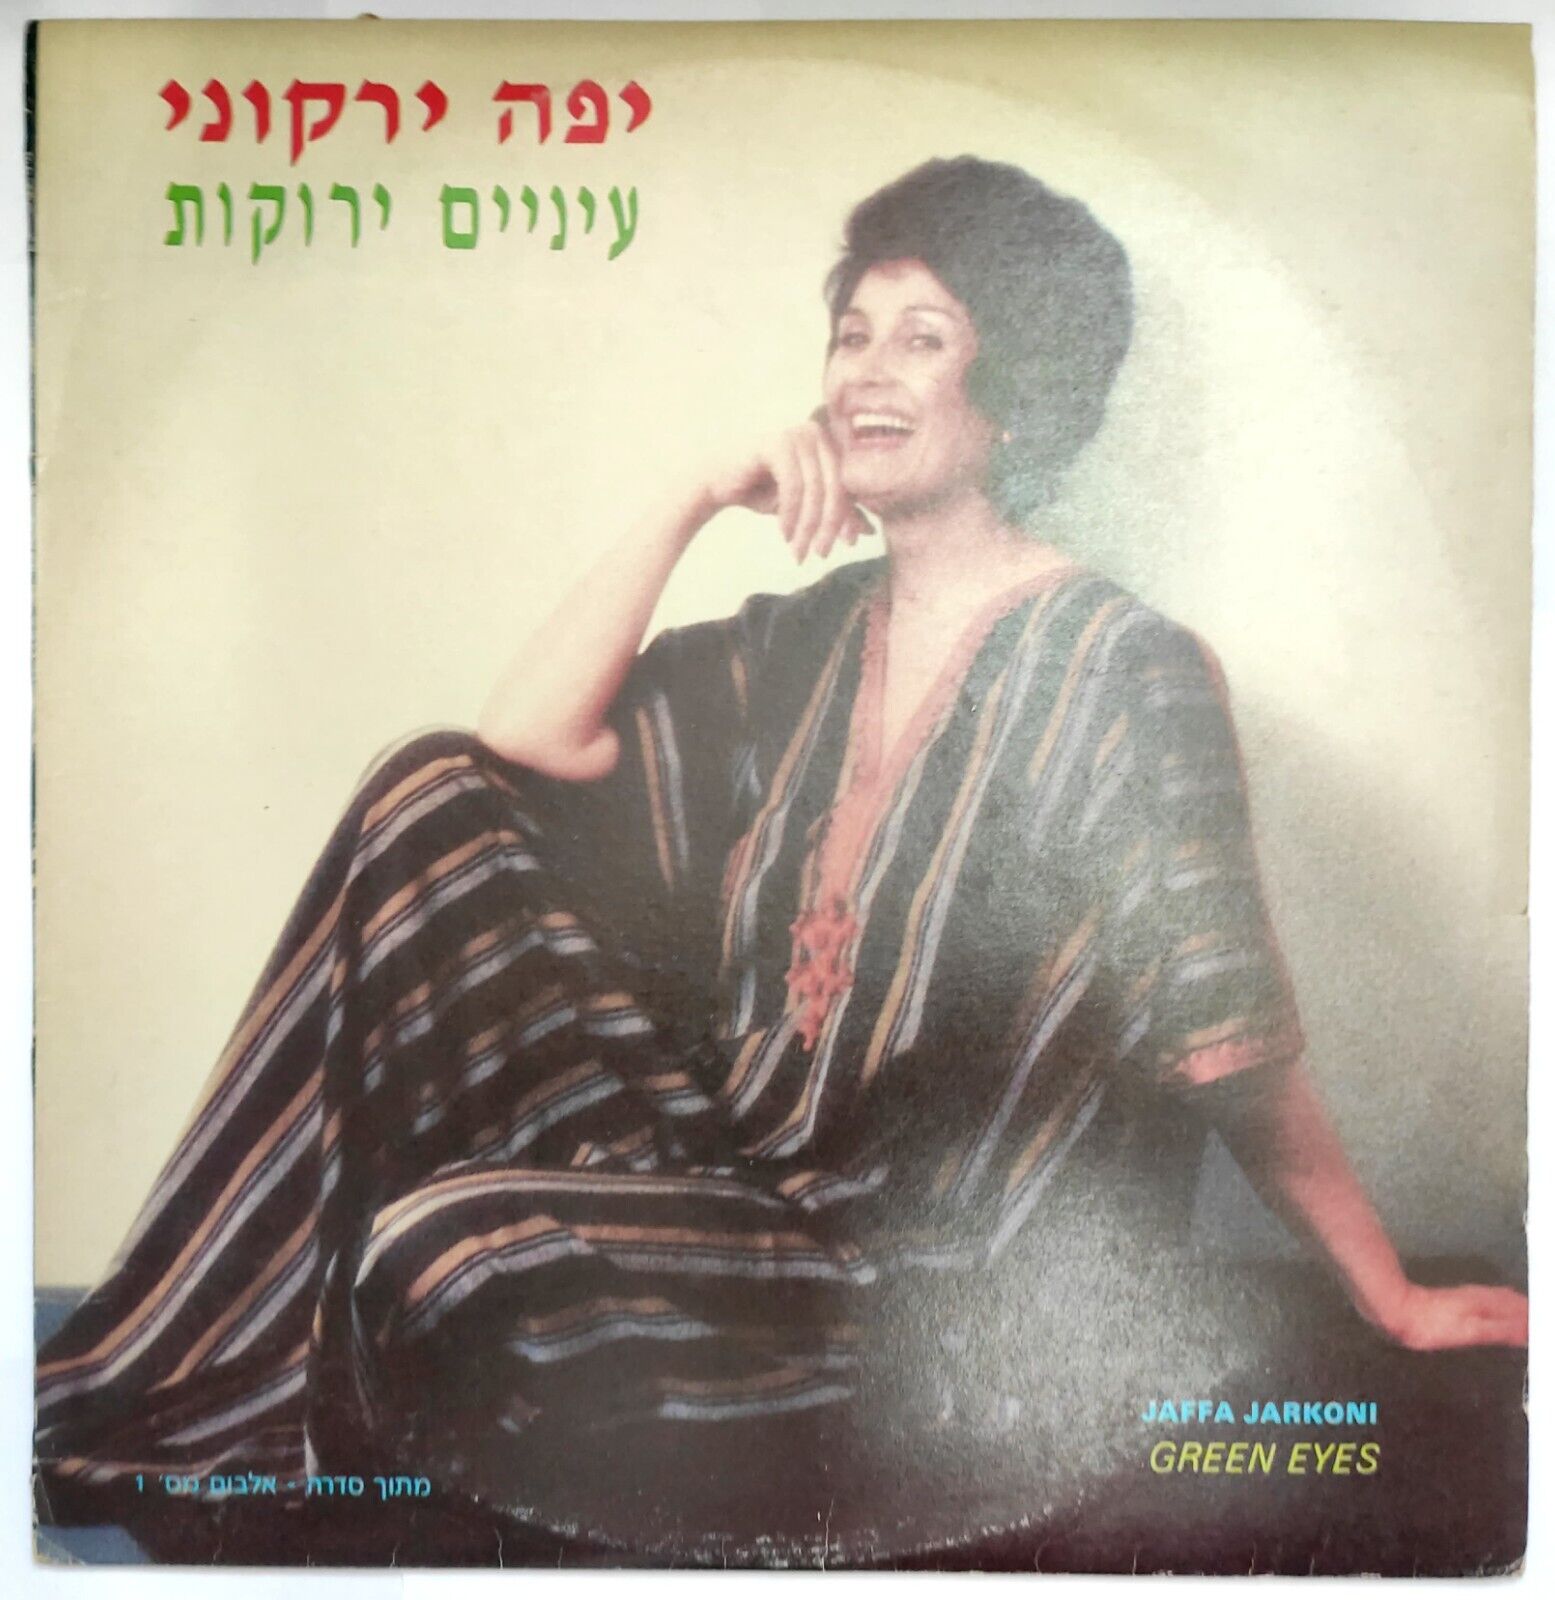 Yaffa Yarkoni – Green Eyes | יפה ירקוני – עיניים ירוקות LP 1988 Israel Hebrew